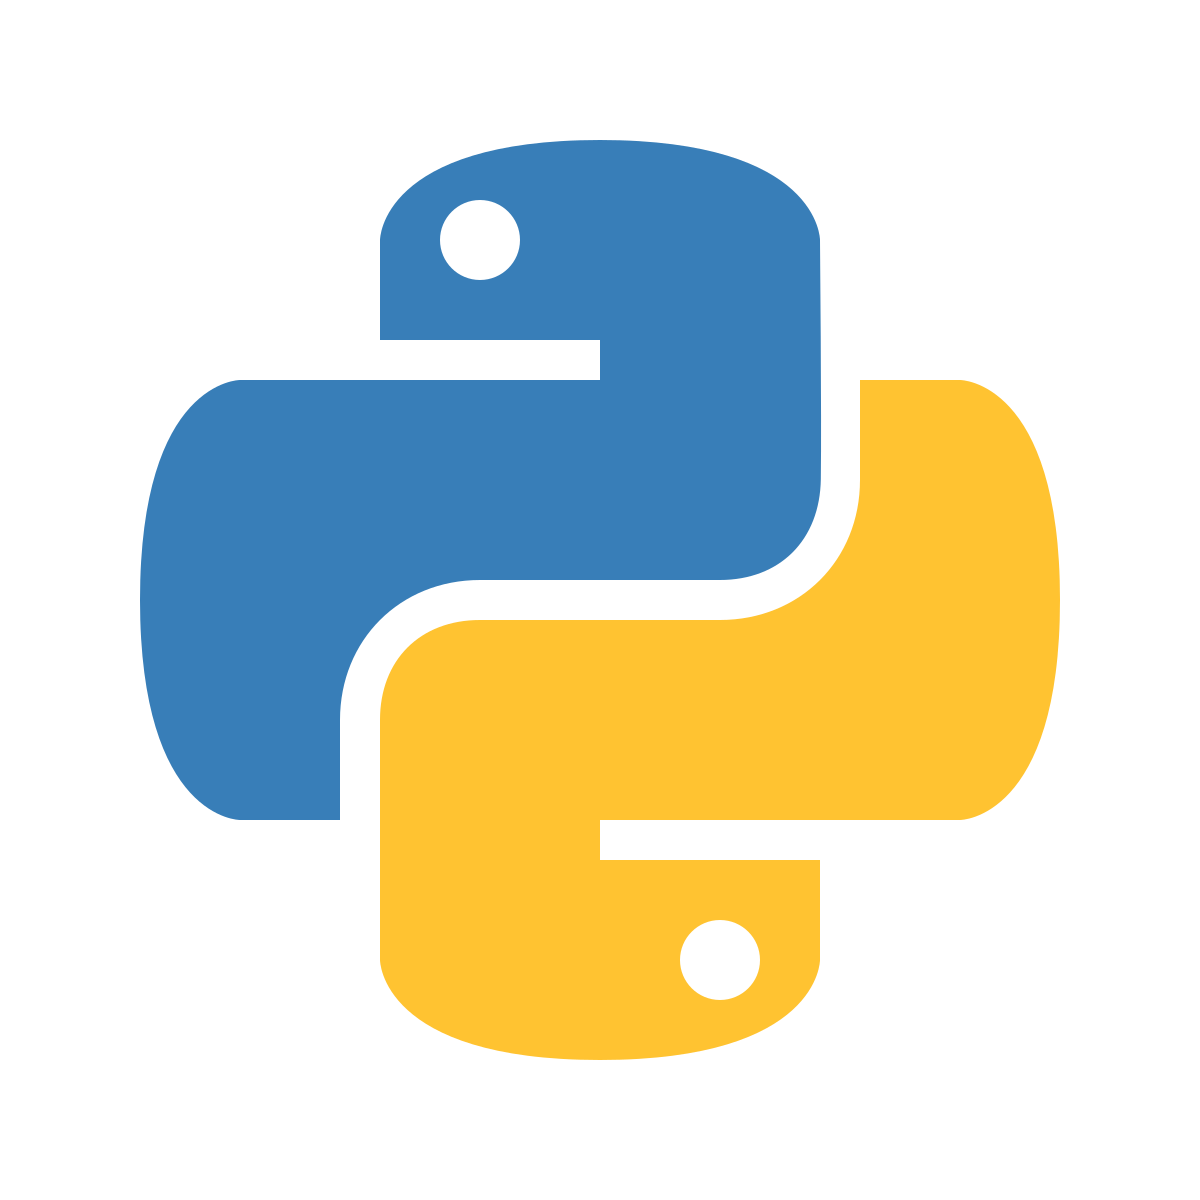 [Python] np.where() - 조건에 맞는 인덱스 찾기